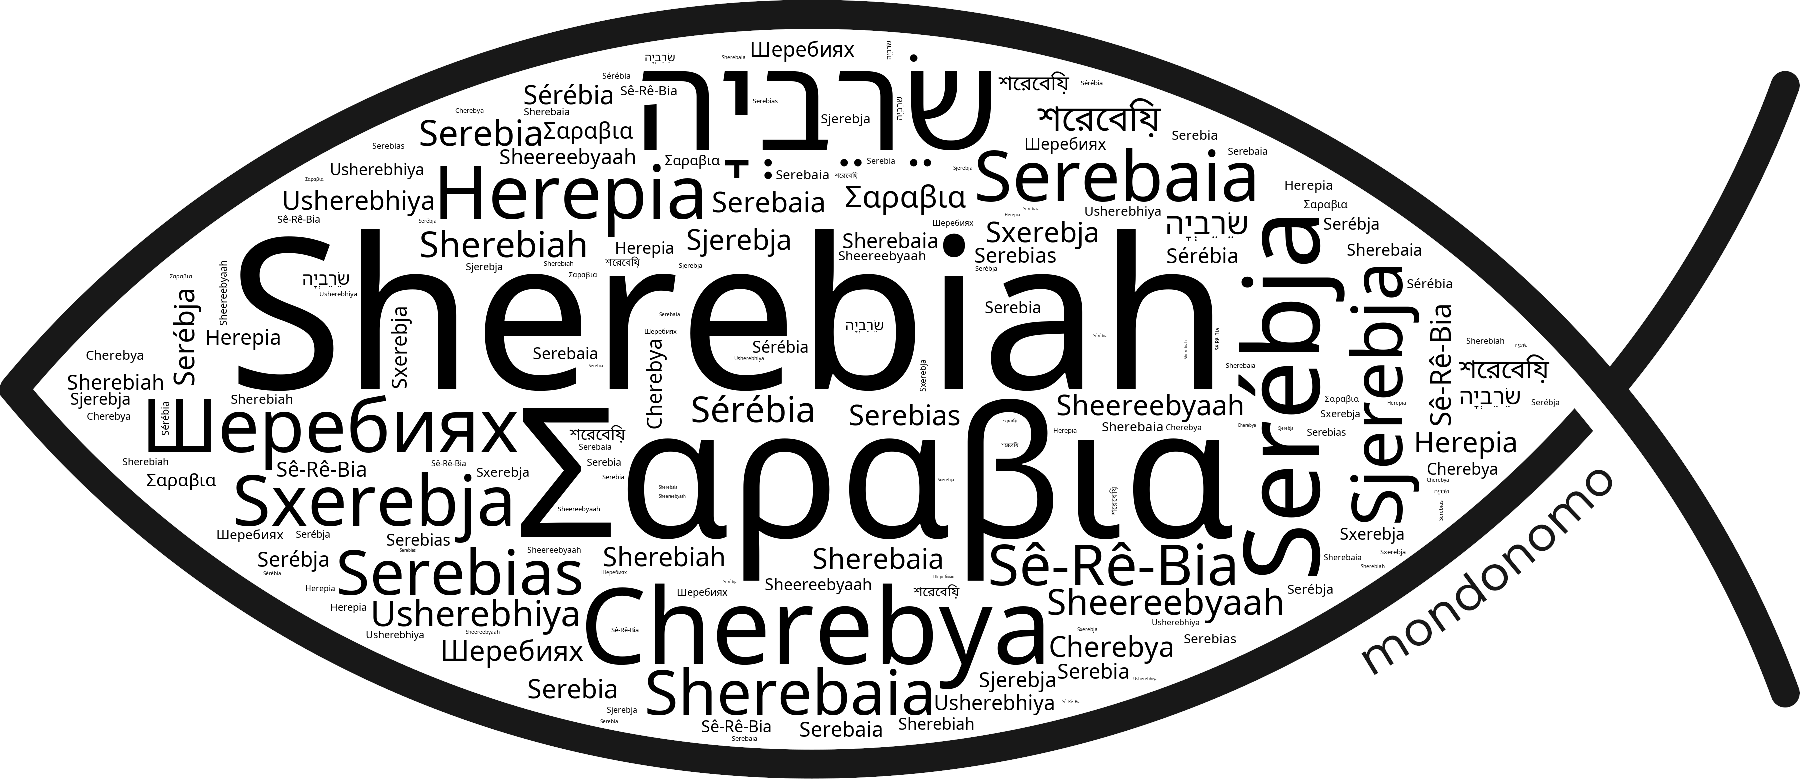 Name Sherebiah in the world's Bibles